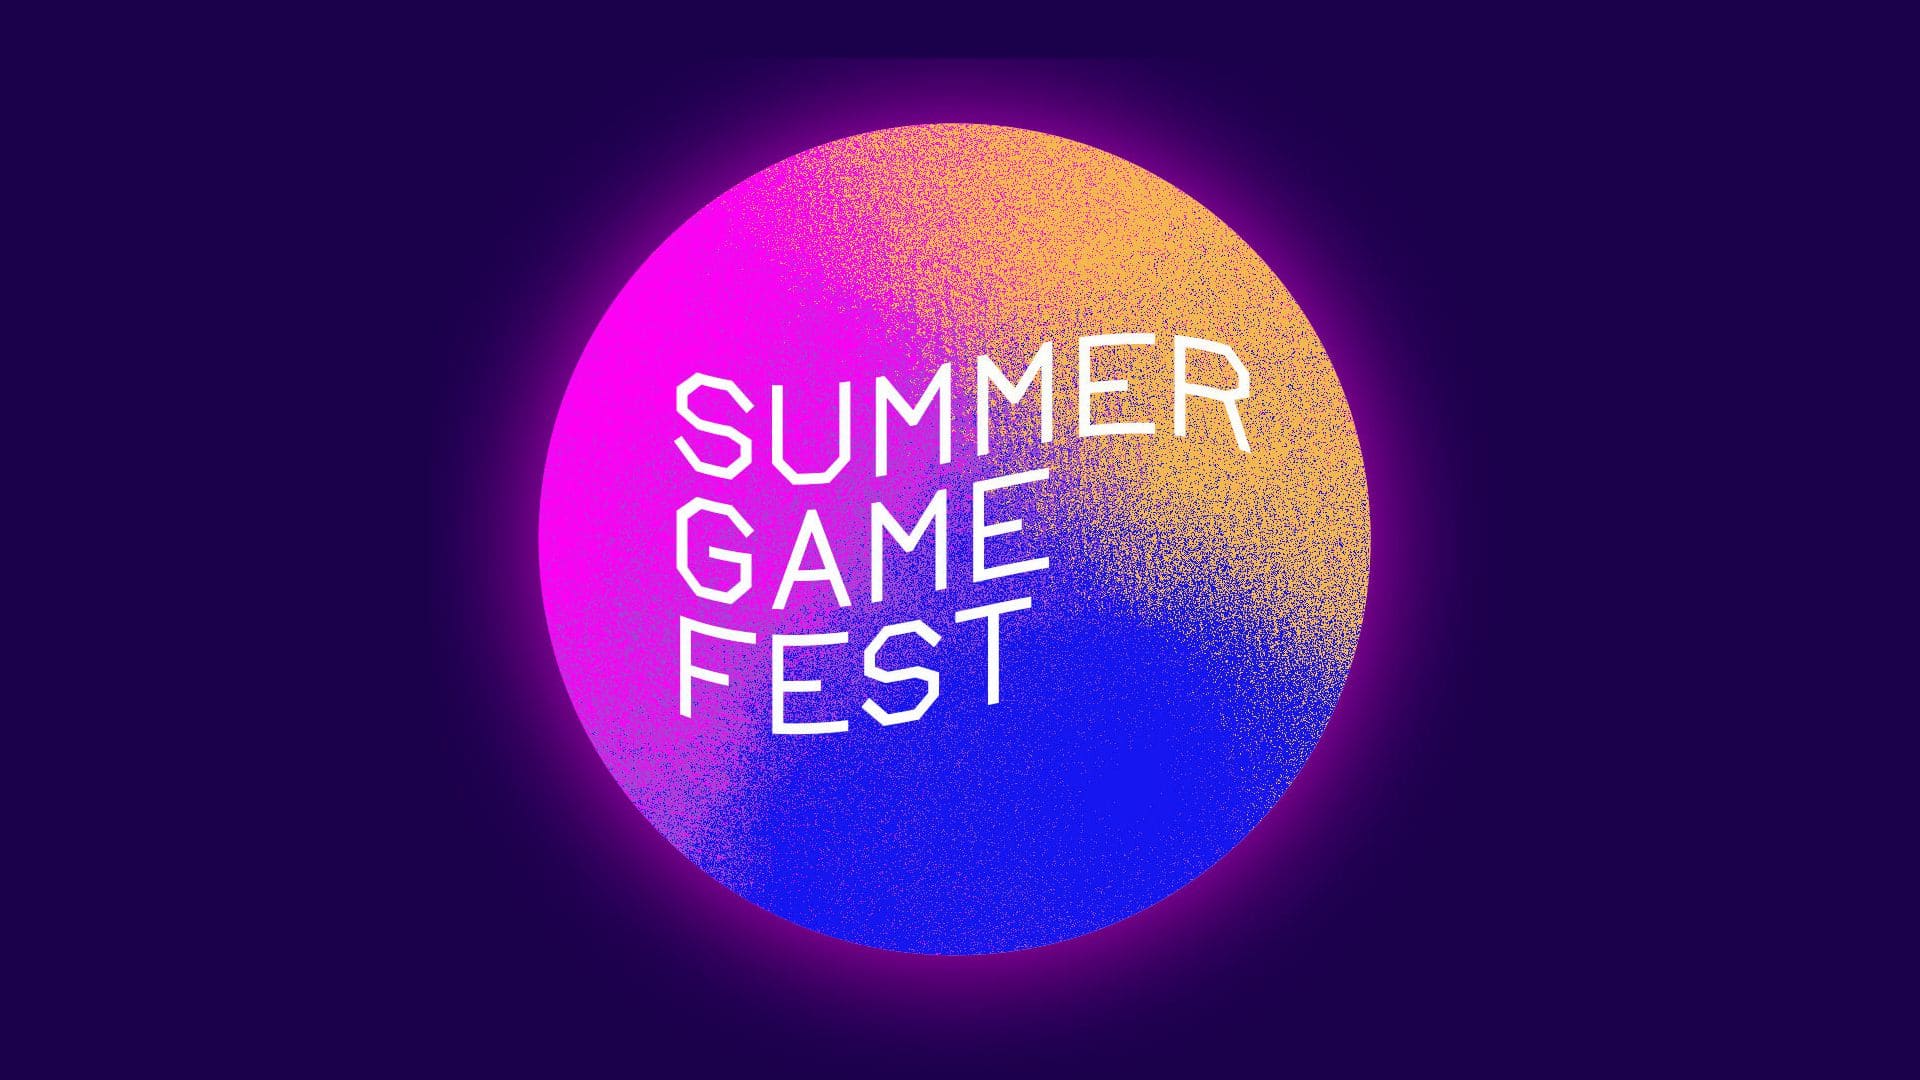 Summer Game Fest 2021 จะจัดขึ้นในวันที่ 11 มิ.ย. นี้